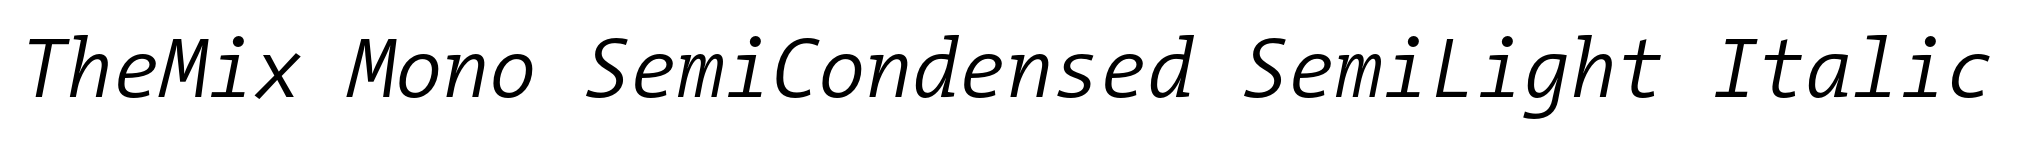 TheMix Mono SemiCondensed SemiLight Italic image